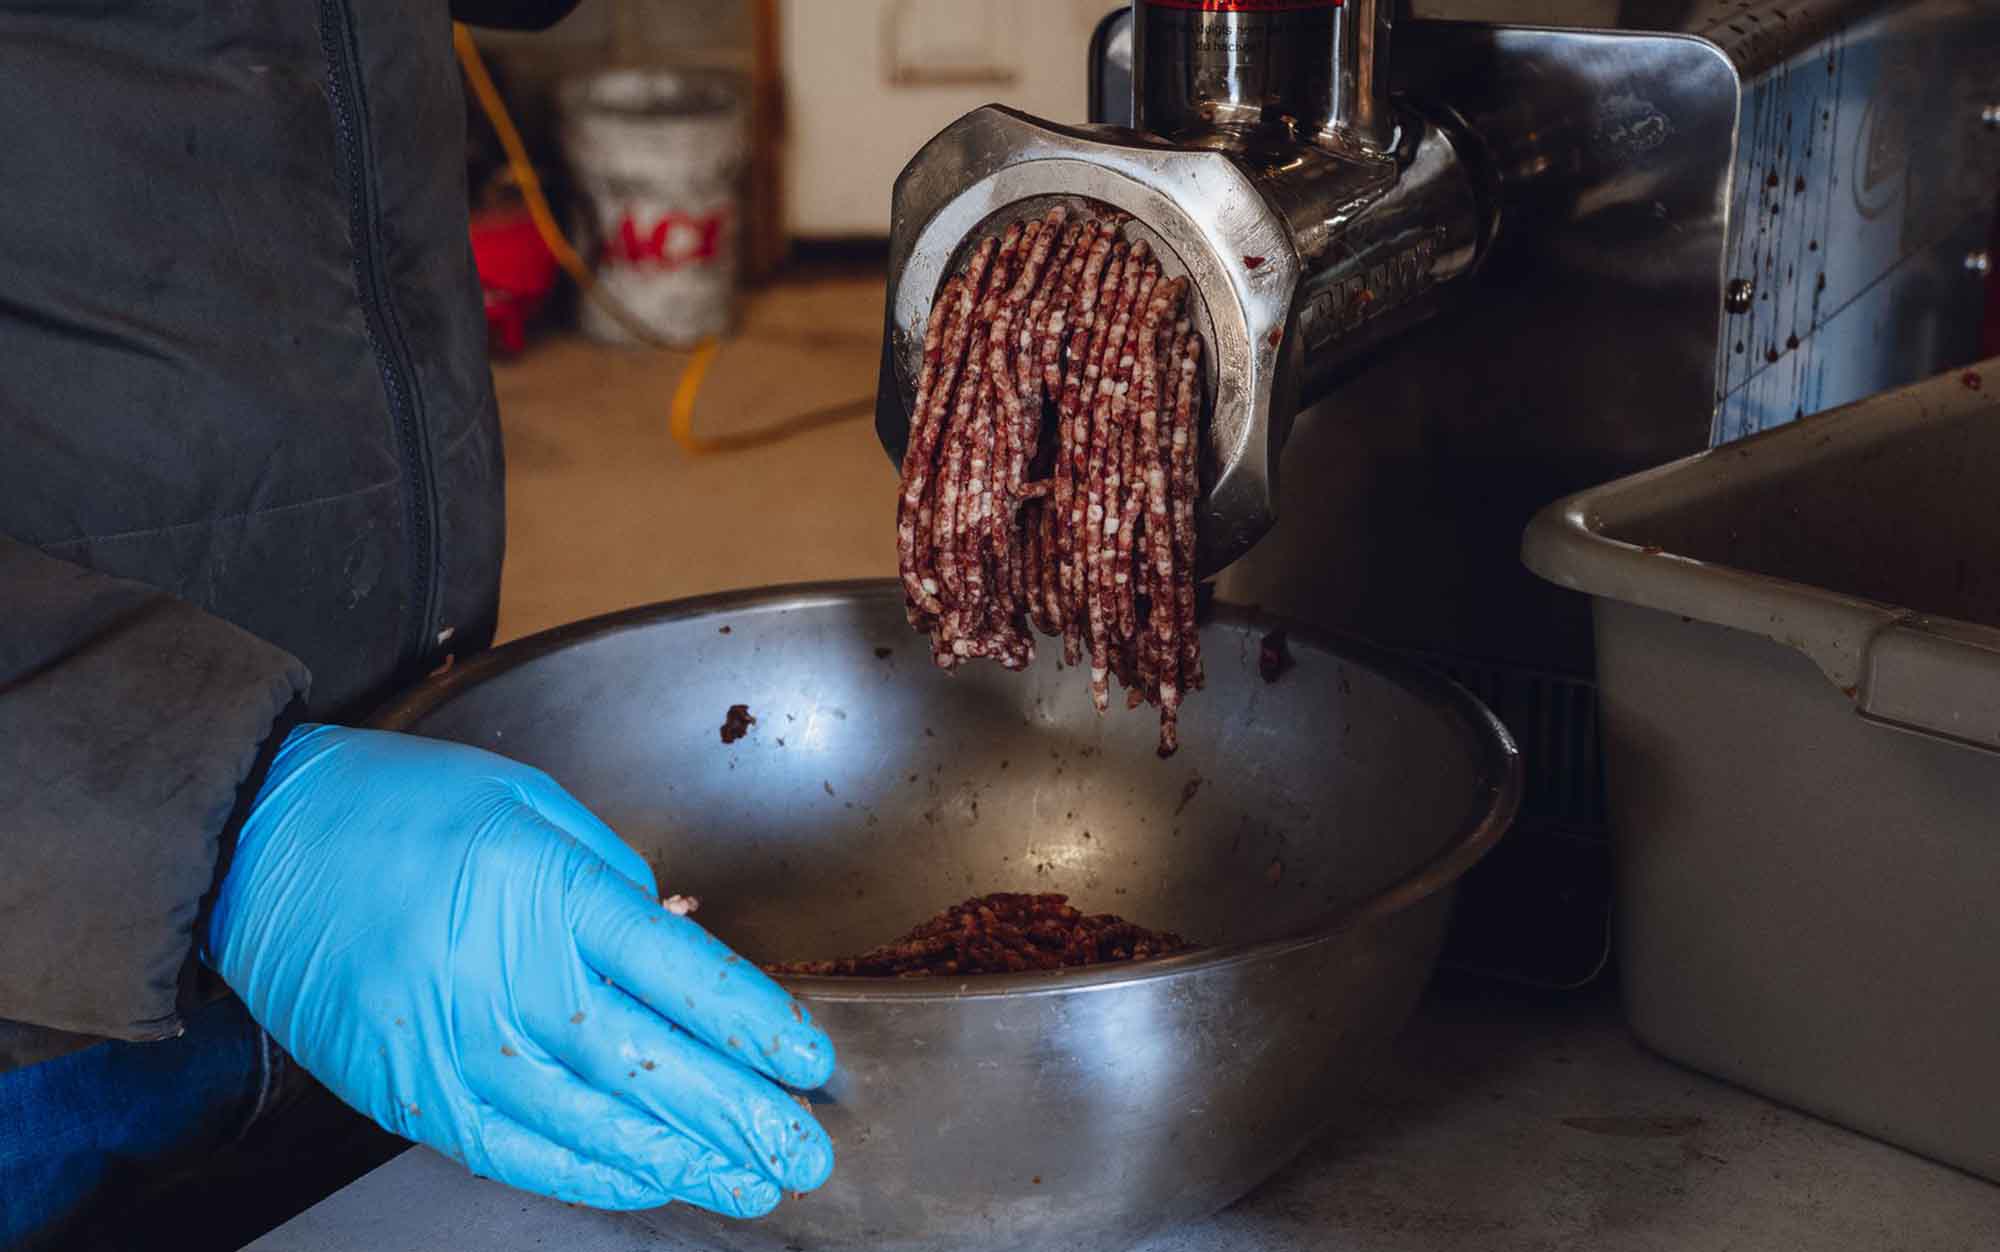 Man puts seasoned venison through a meat grinder.